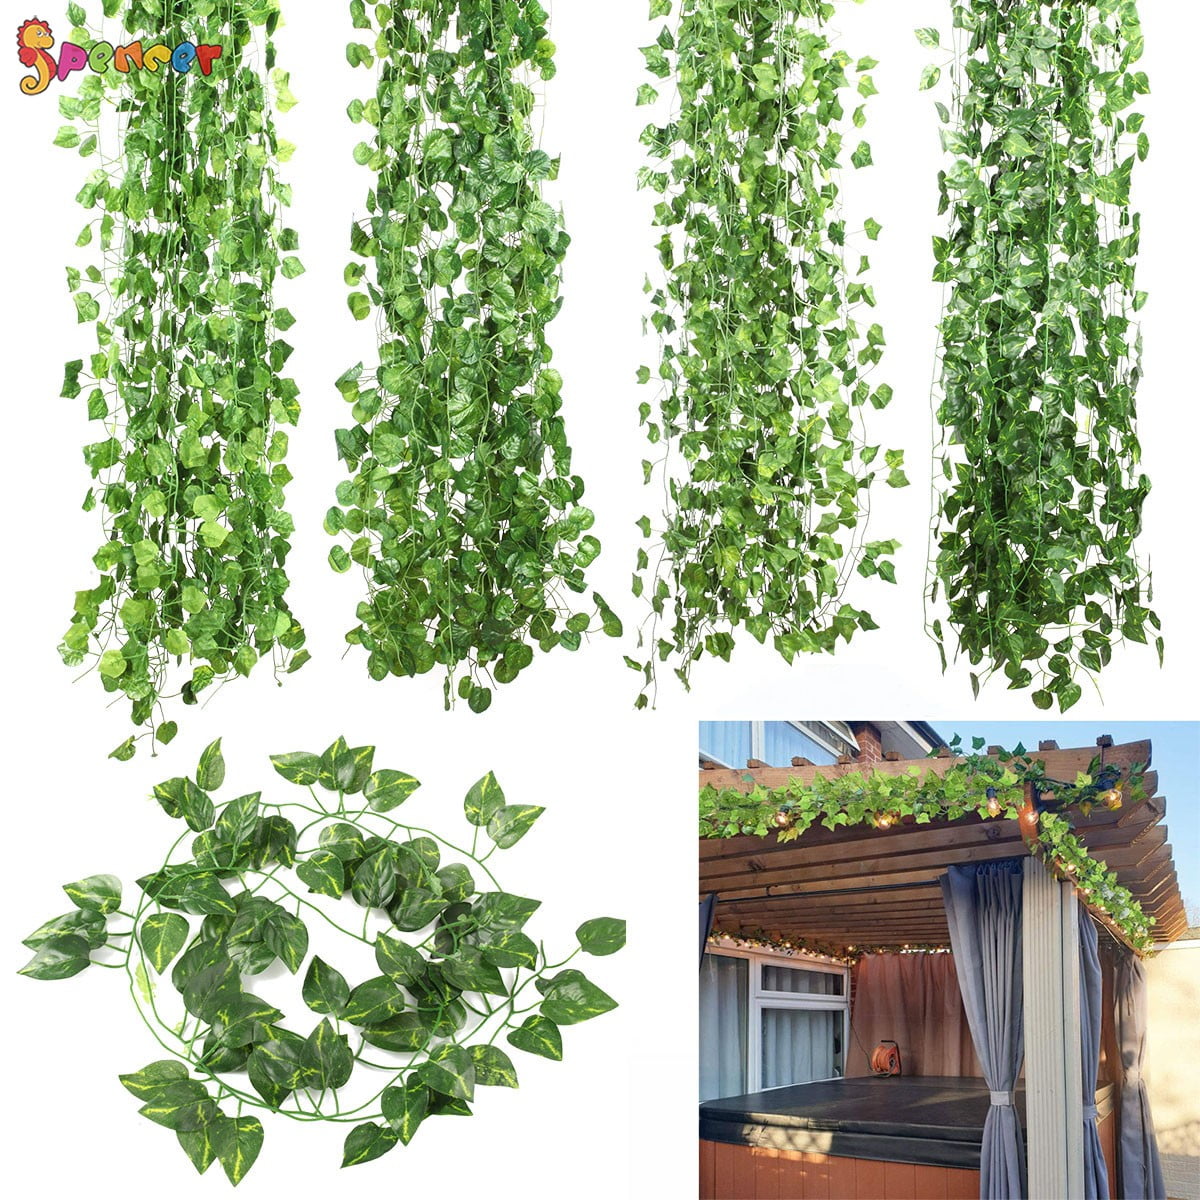 Details about   6/12PCS Artificial Ivy Leaf Plants Fake Hanging Garland Plants Vine Home Decor 